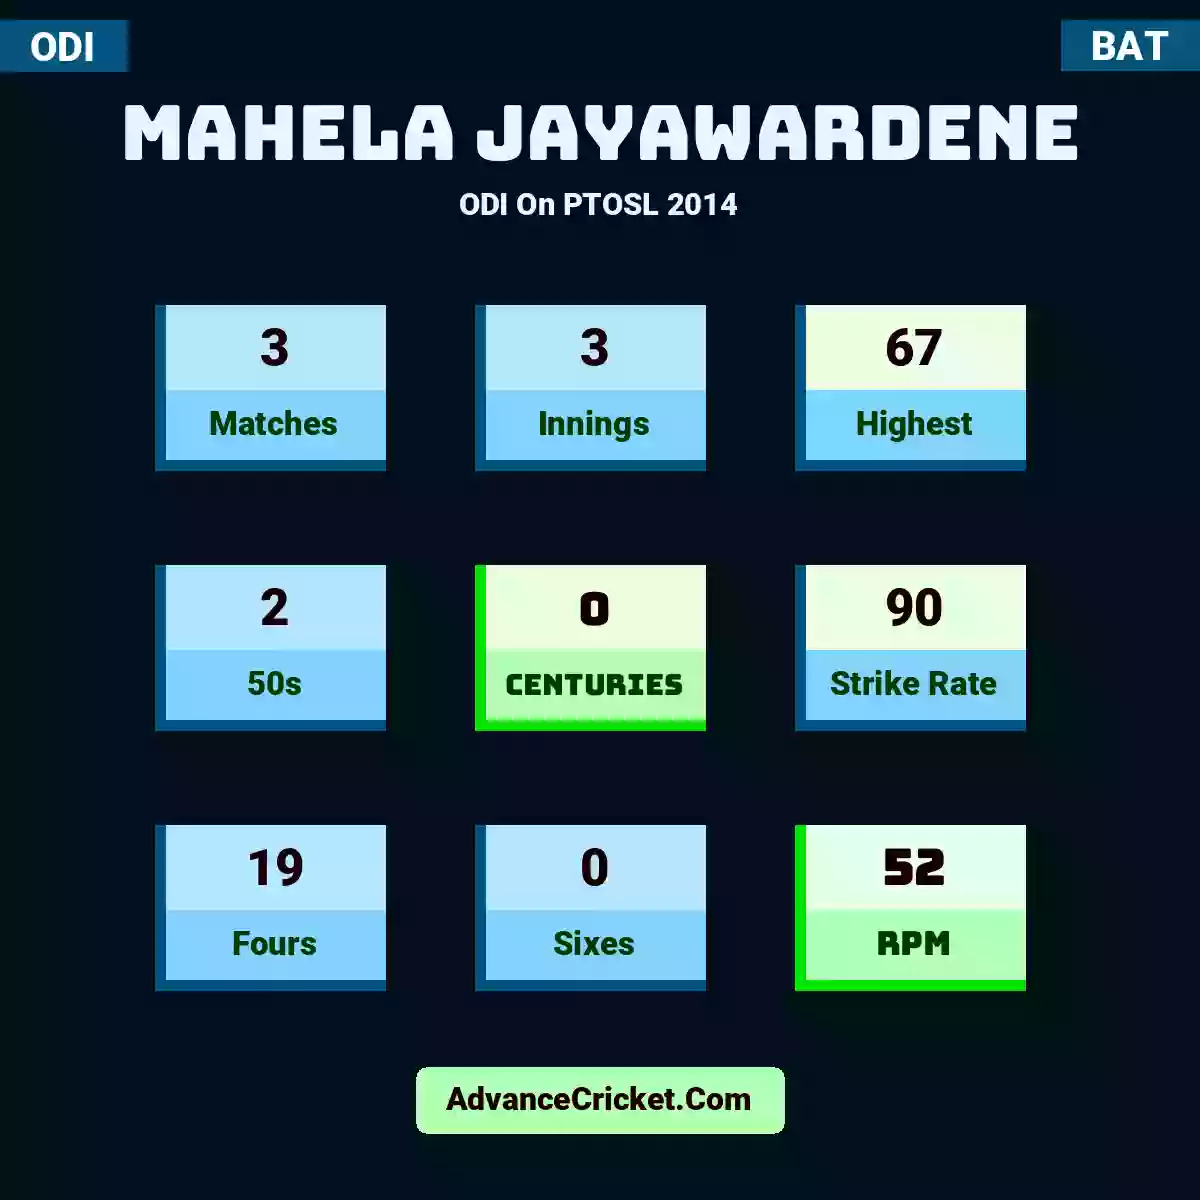 Mahela Jayawardene ODI  On PTOSL 2014, Mahela Jayawardene played 3 matches, scored 67 runs as highest, 2 half-centuries, and 0 centuries, with a strike rate of 90. M.Jayawardene hit 19 fours and 0 sixes, with an RPM of 52.